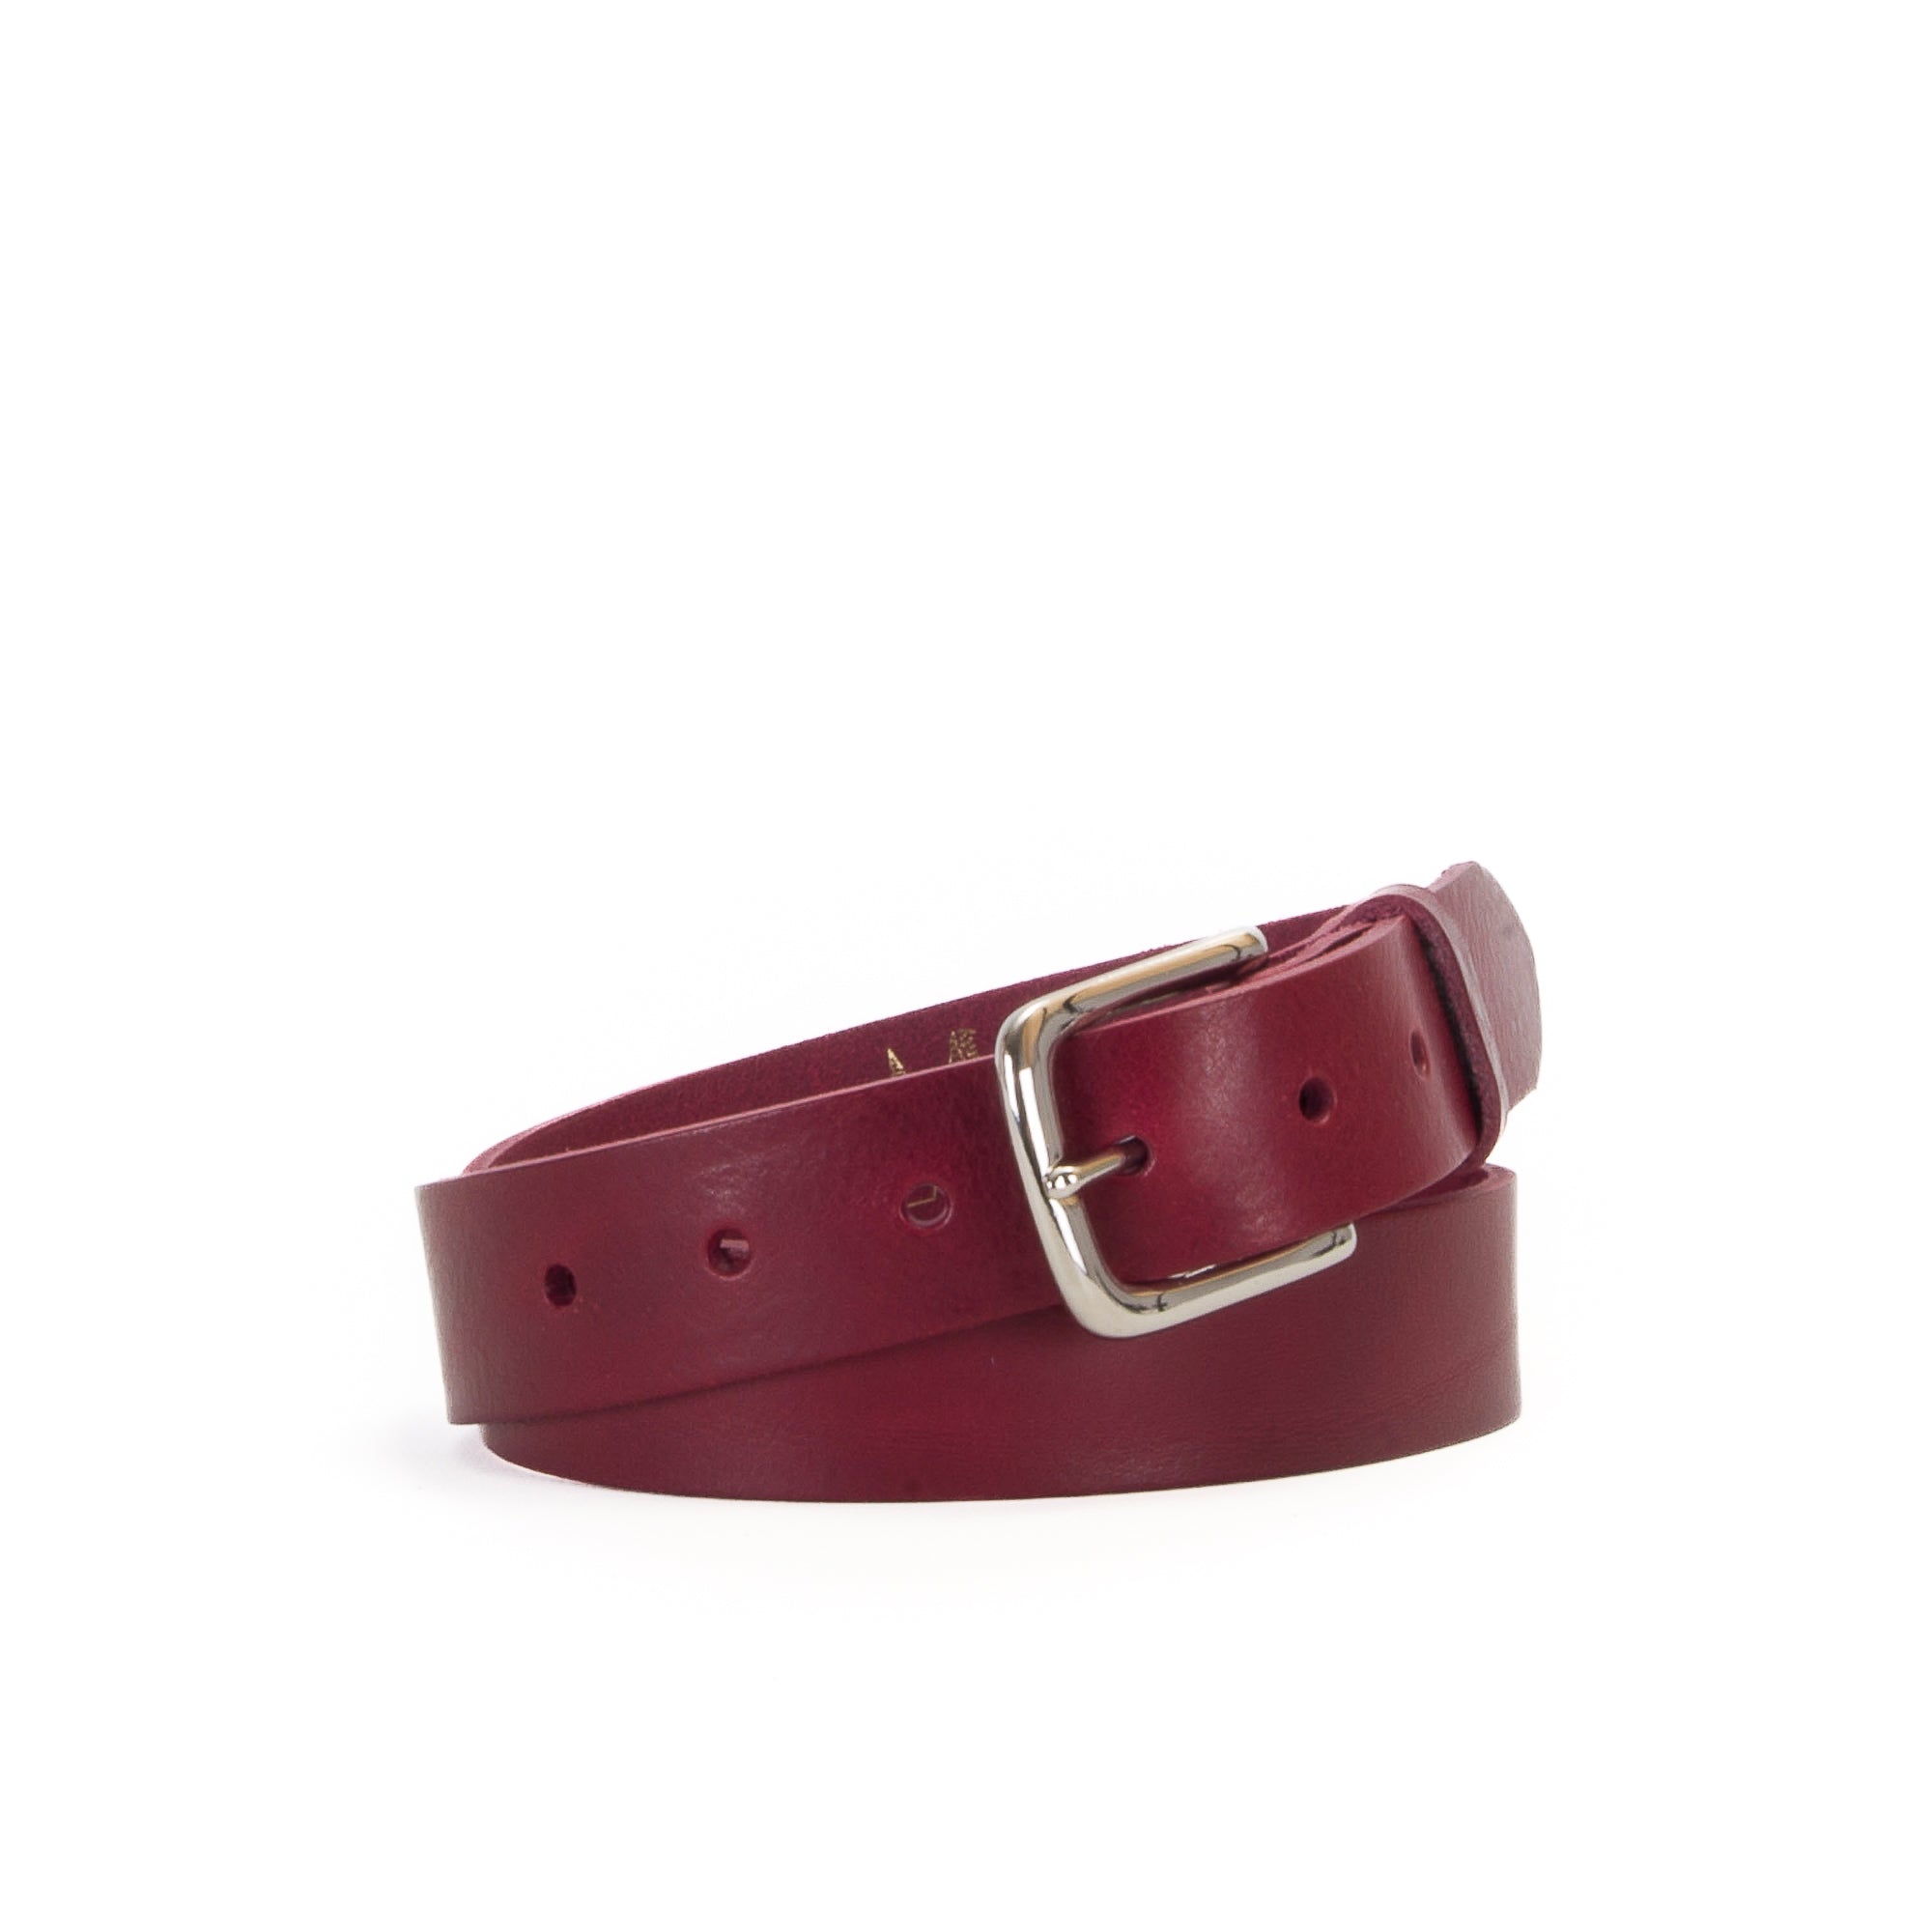 Photo of Burgundy Leather Belt. Design classic.